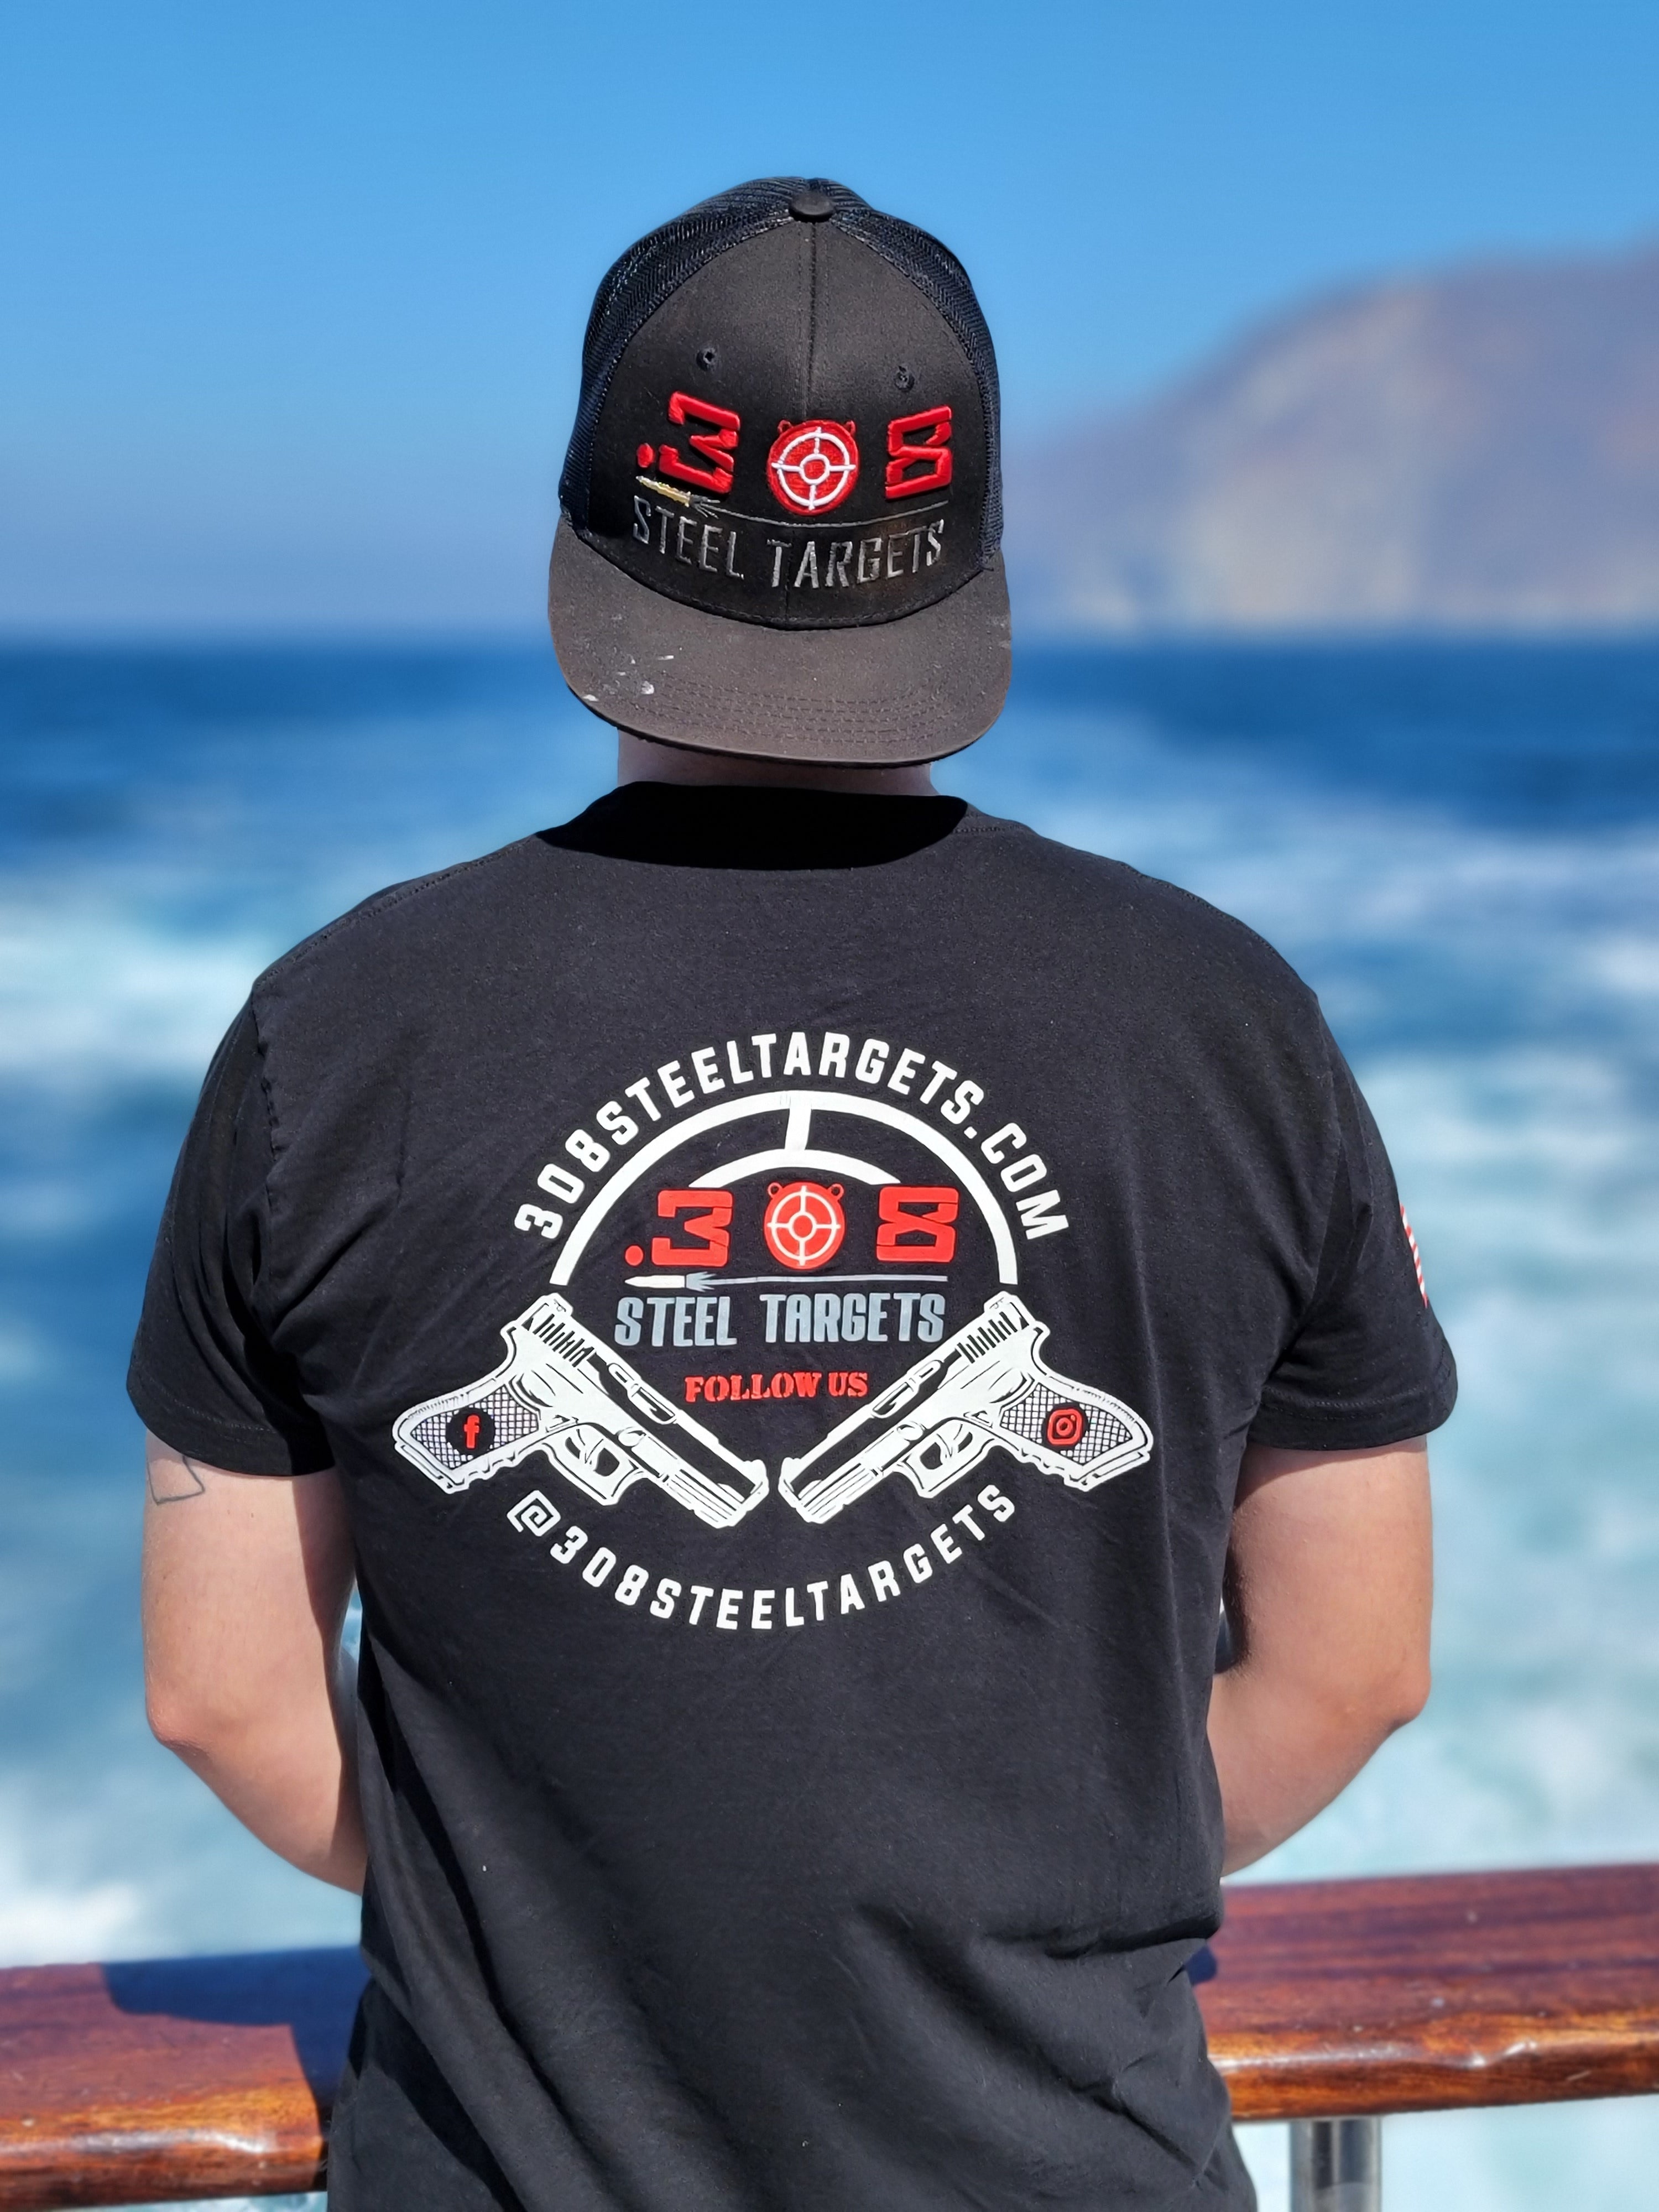 .308 Steel Targets T-shirt